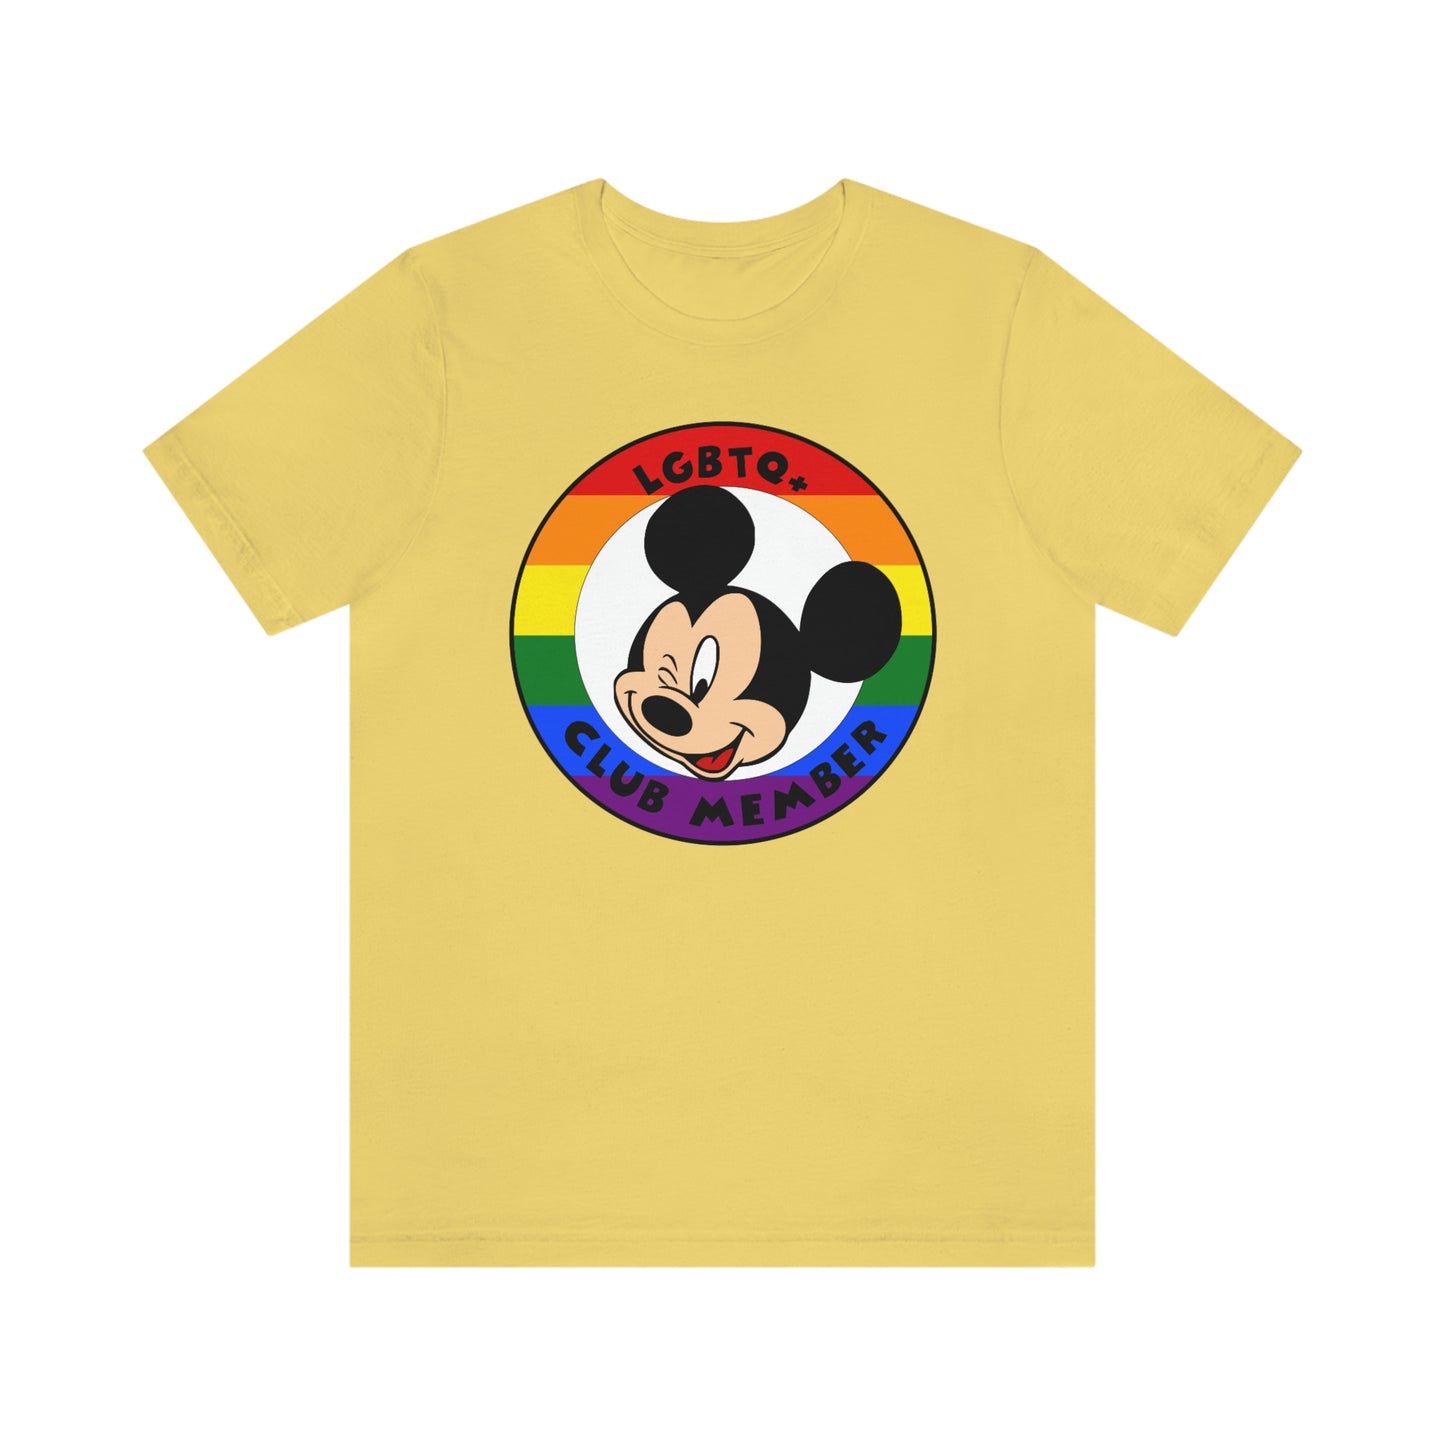 LGBTQ+ Mouse Club Adult Unisex T-Shirt